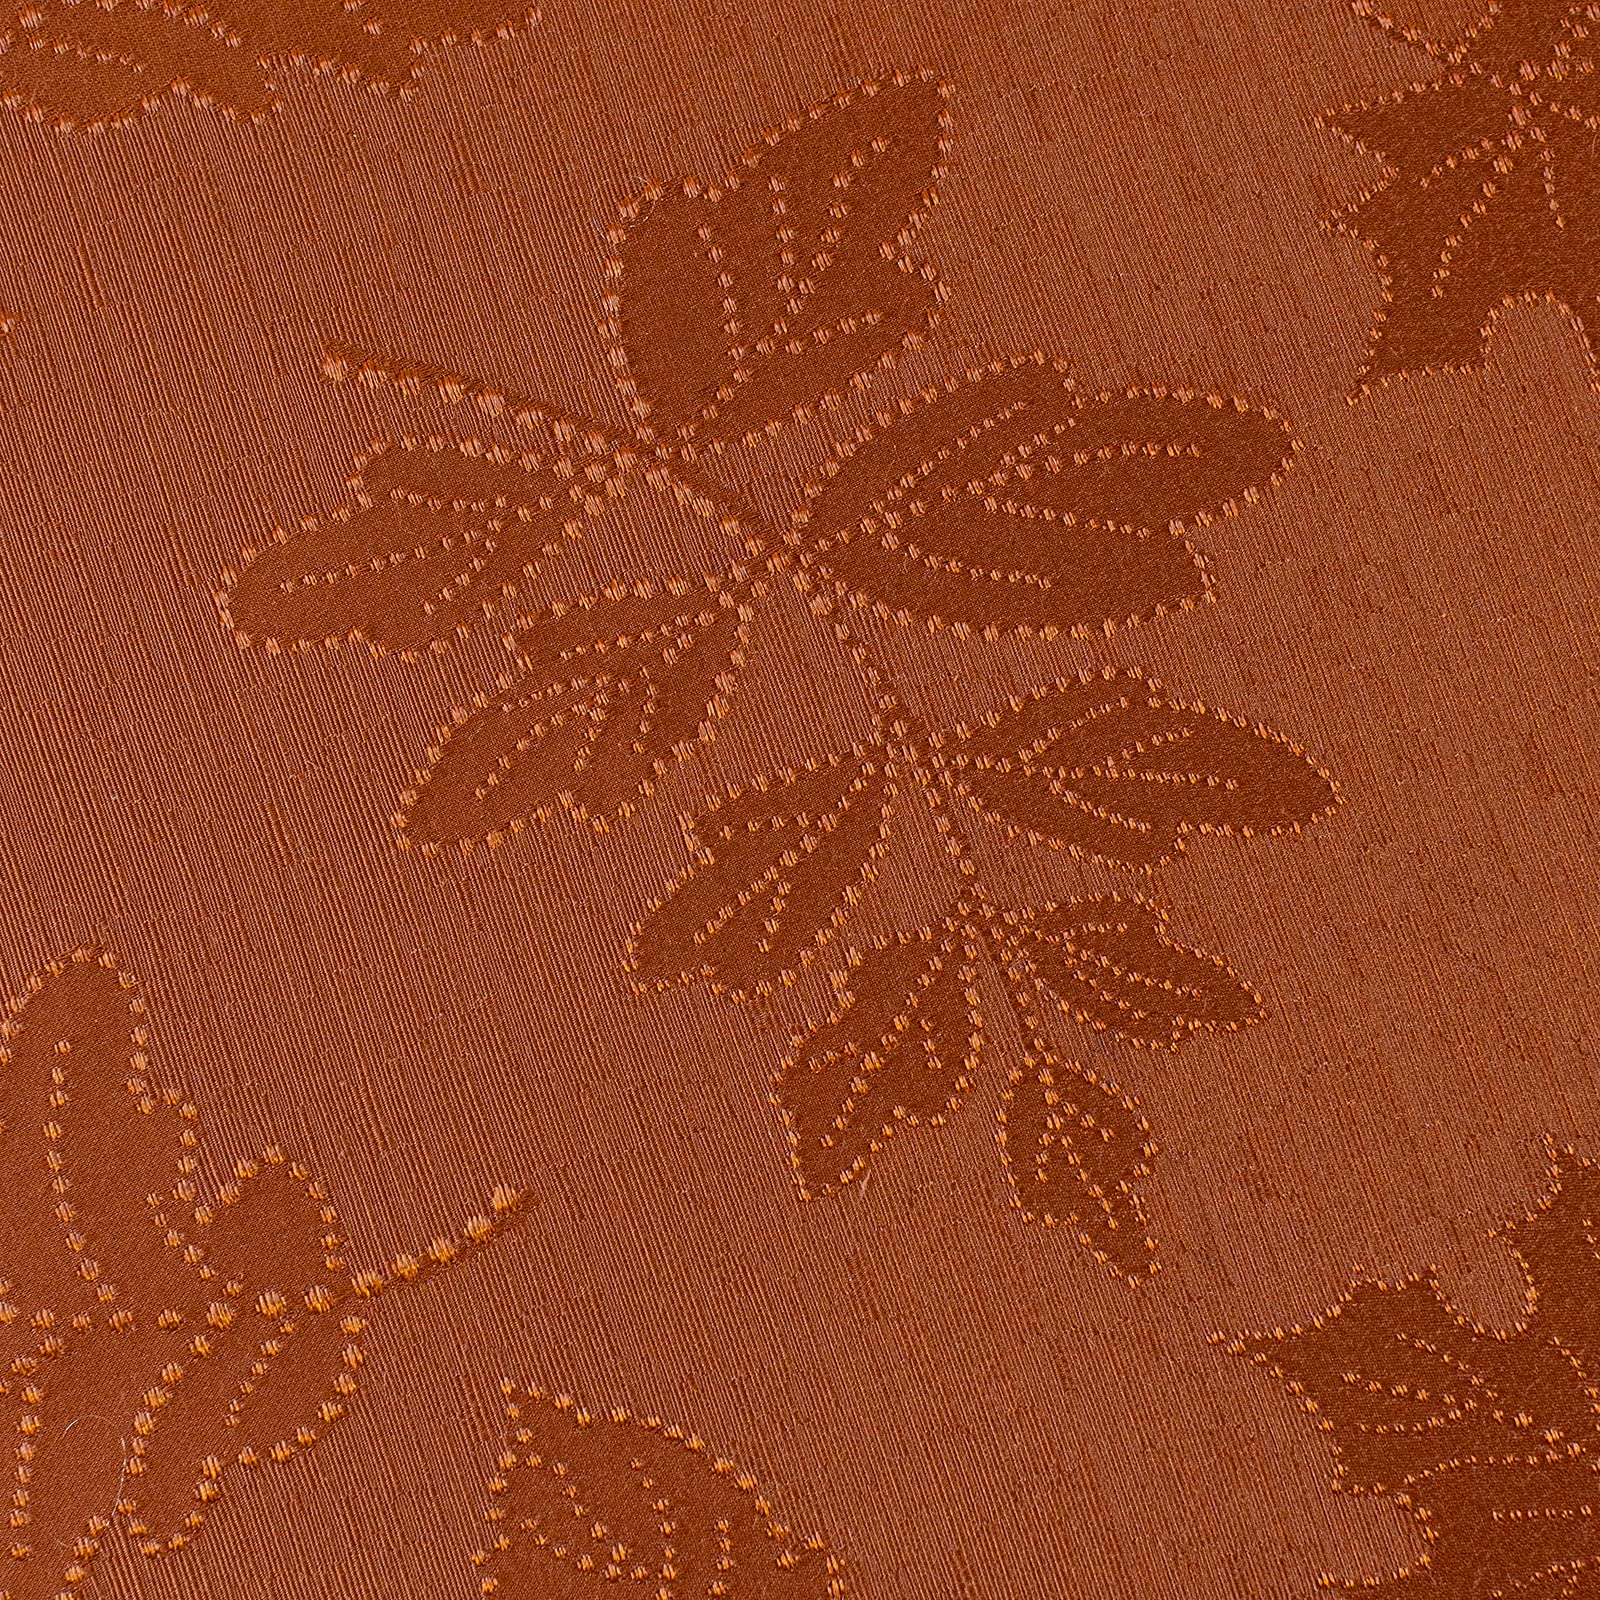 Benson Mills Harvest Legacy Damask Fabric Table Cloth Fall, Harvest, and Thanksgiving Tablecloth (Rust/Burnt Orange, 60" x 84" Rectangular)